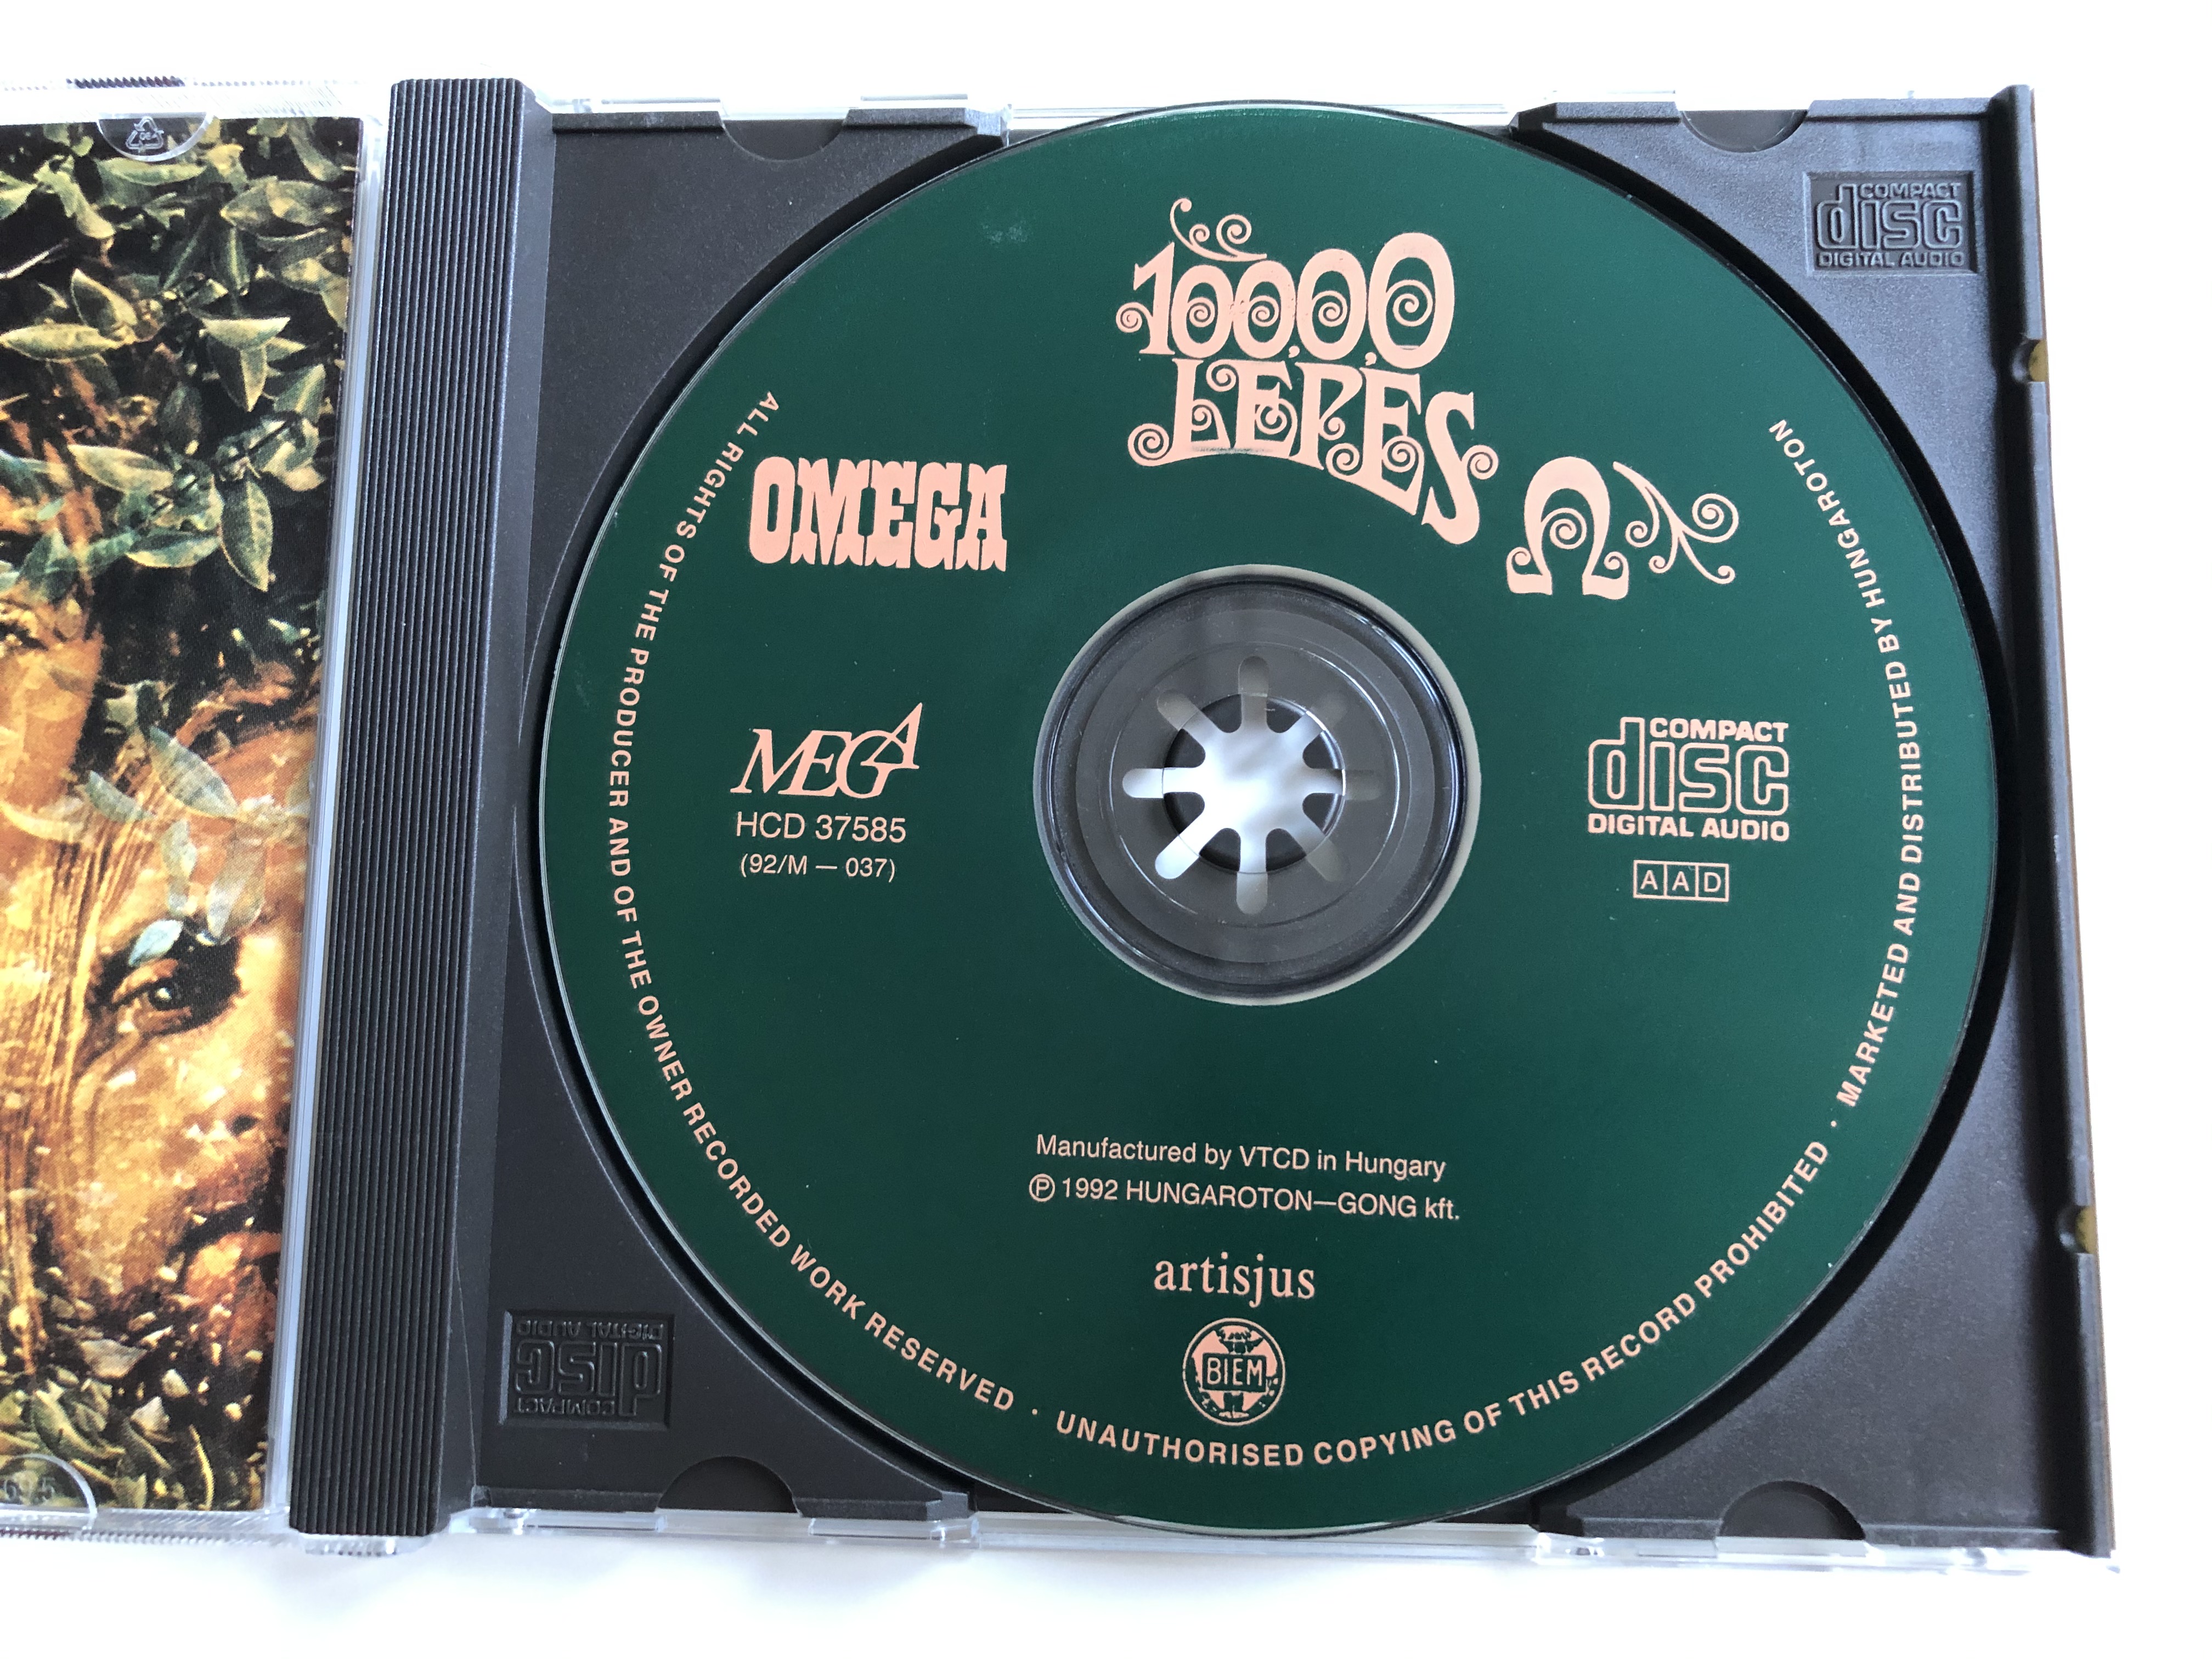 10000-l-p-s-omega-mega-audio-cd-1992-hcd-37585-92m-037-5-.jpg